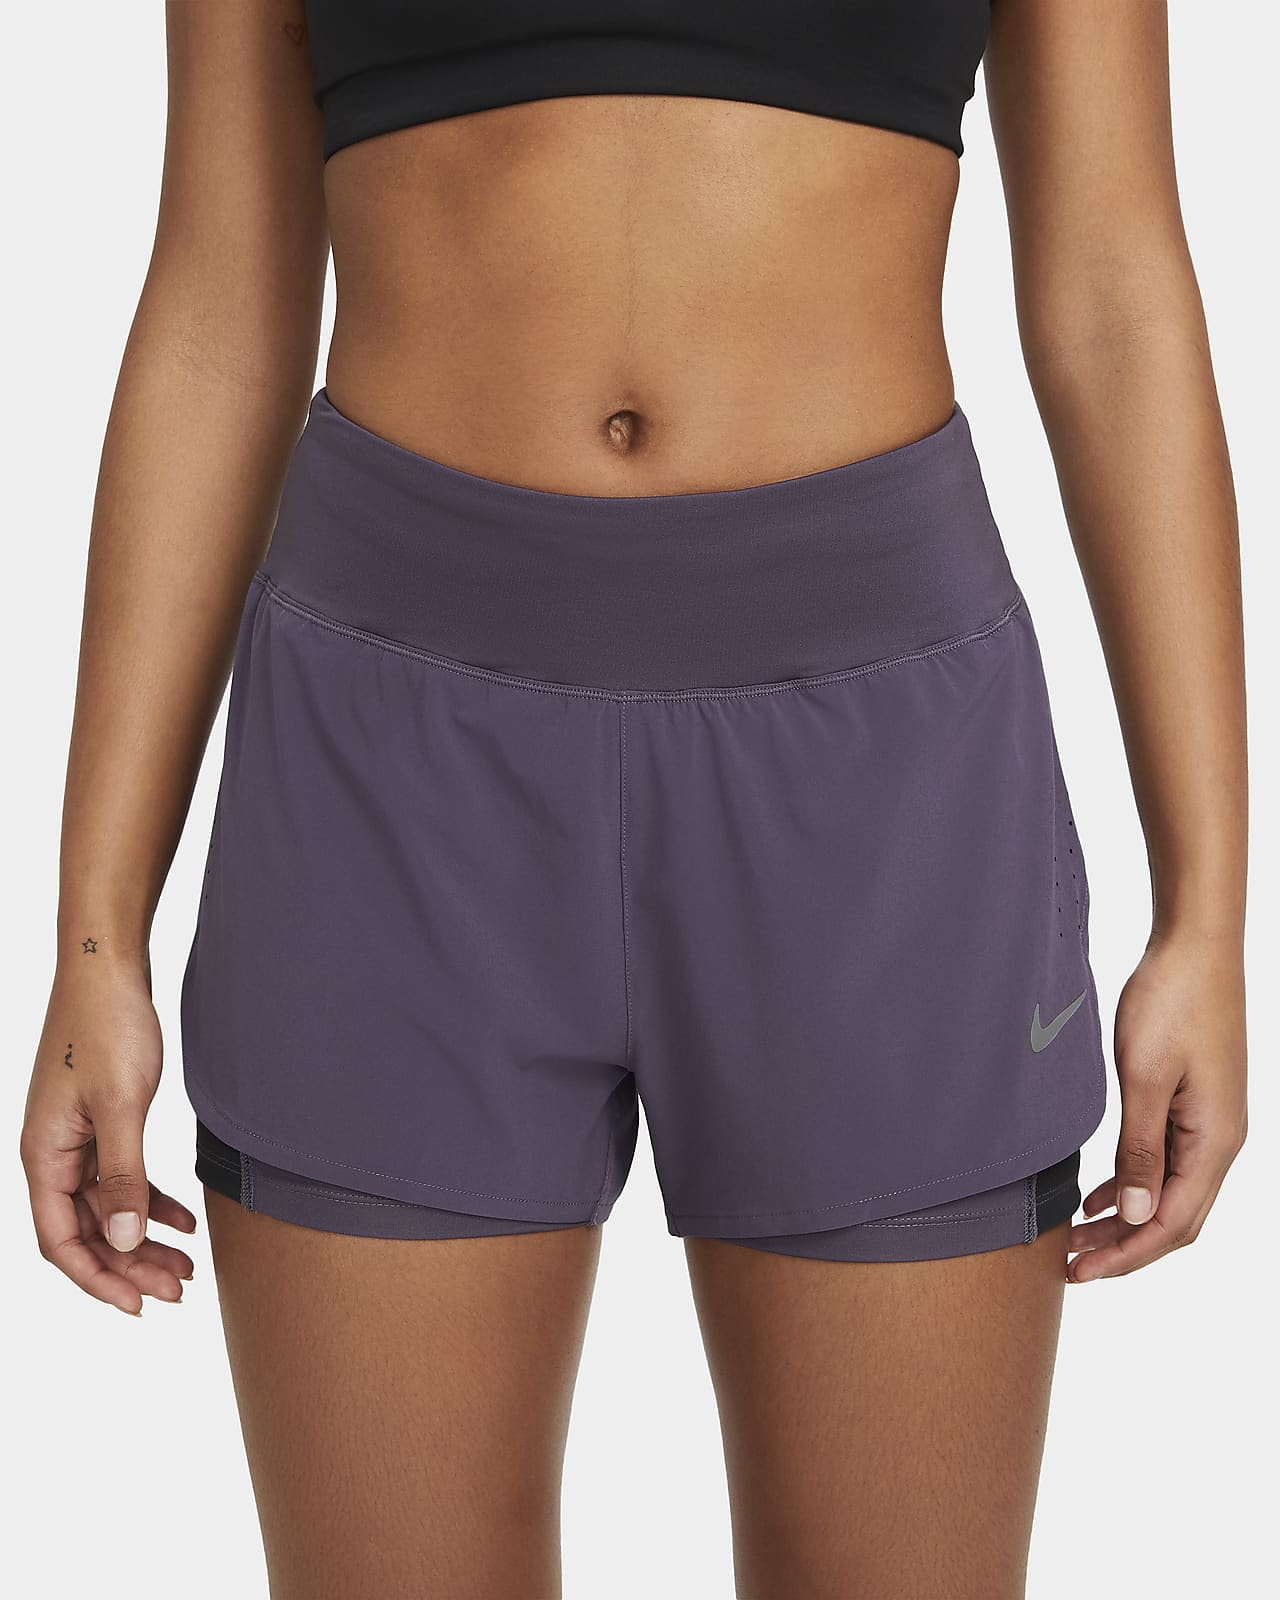 nike 2in1 running shorts women's